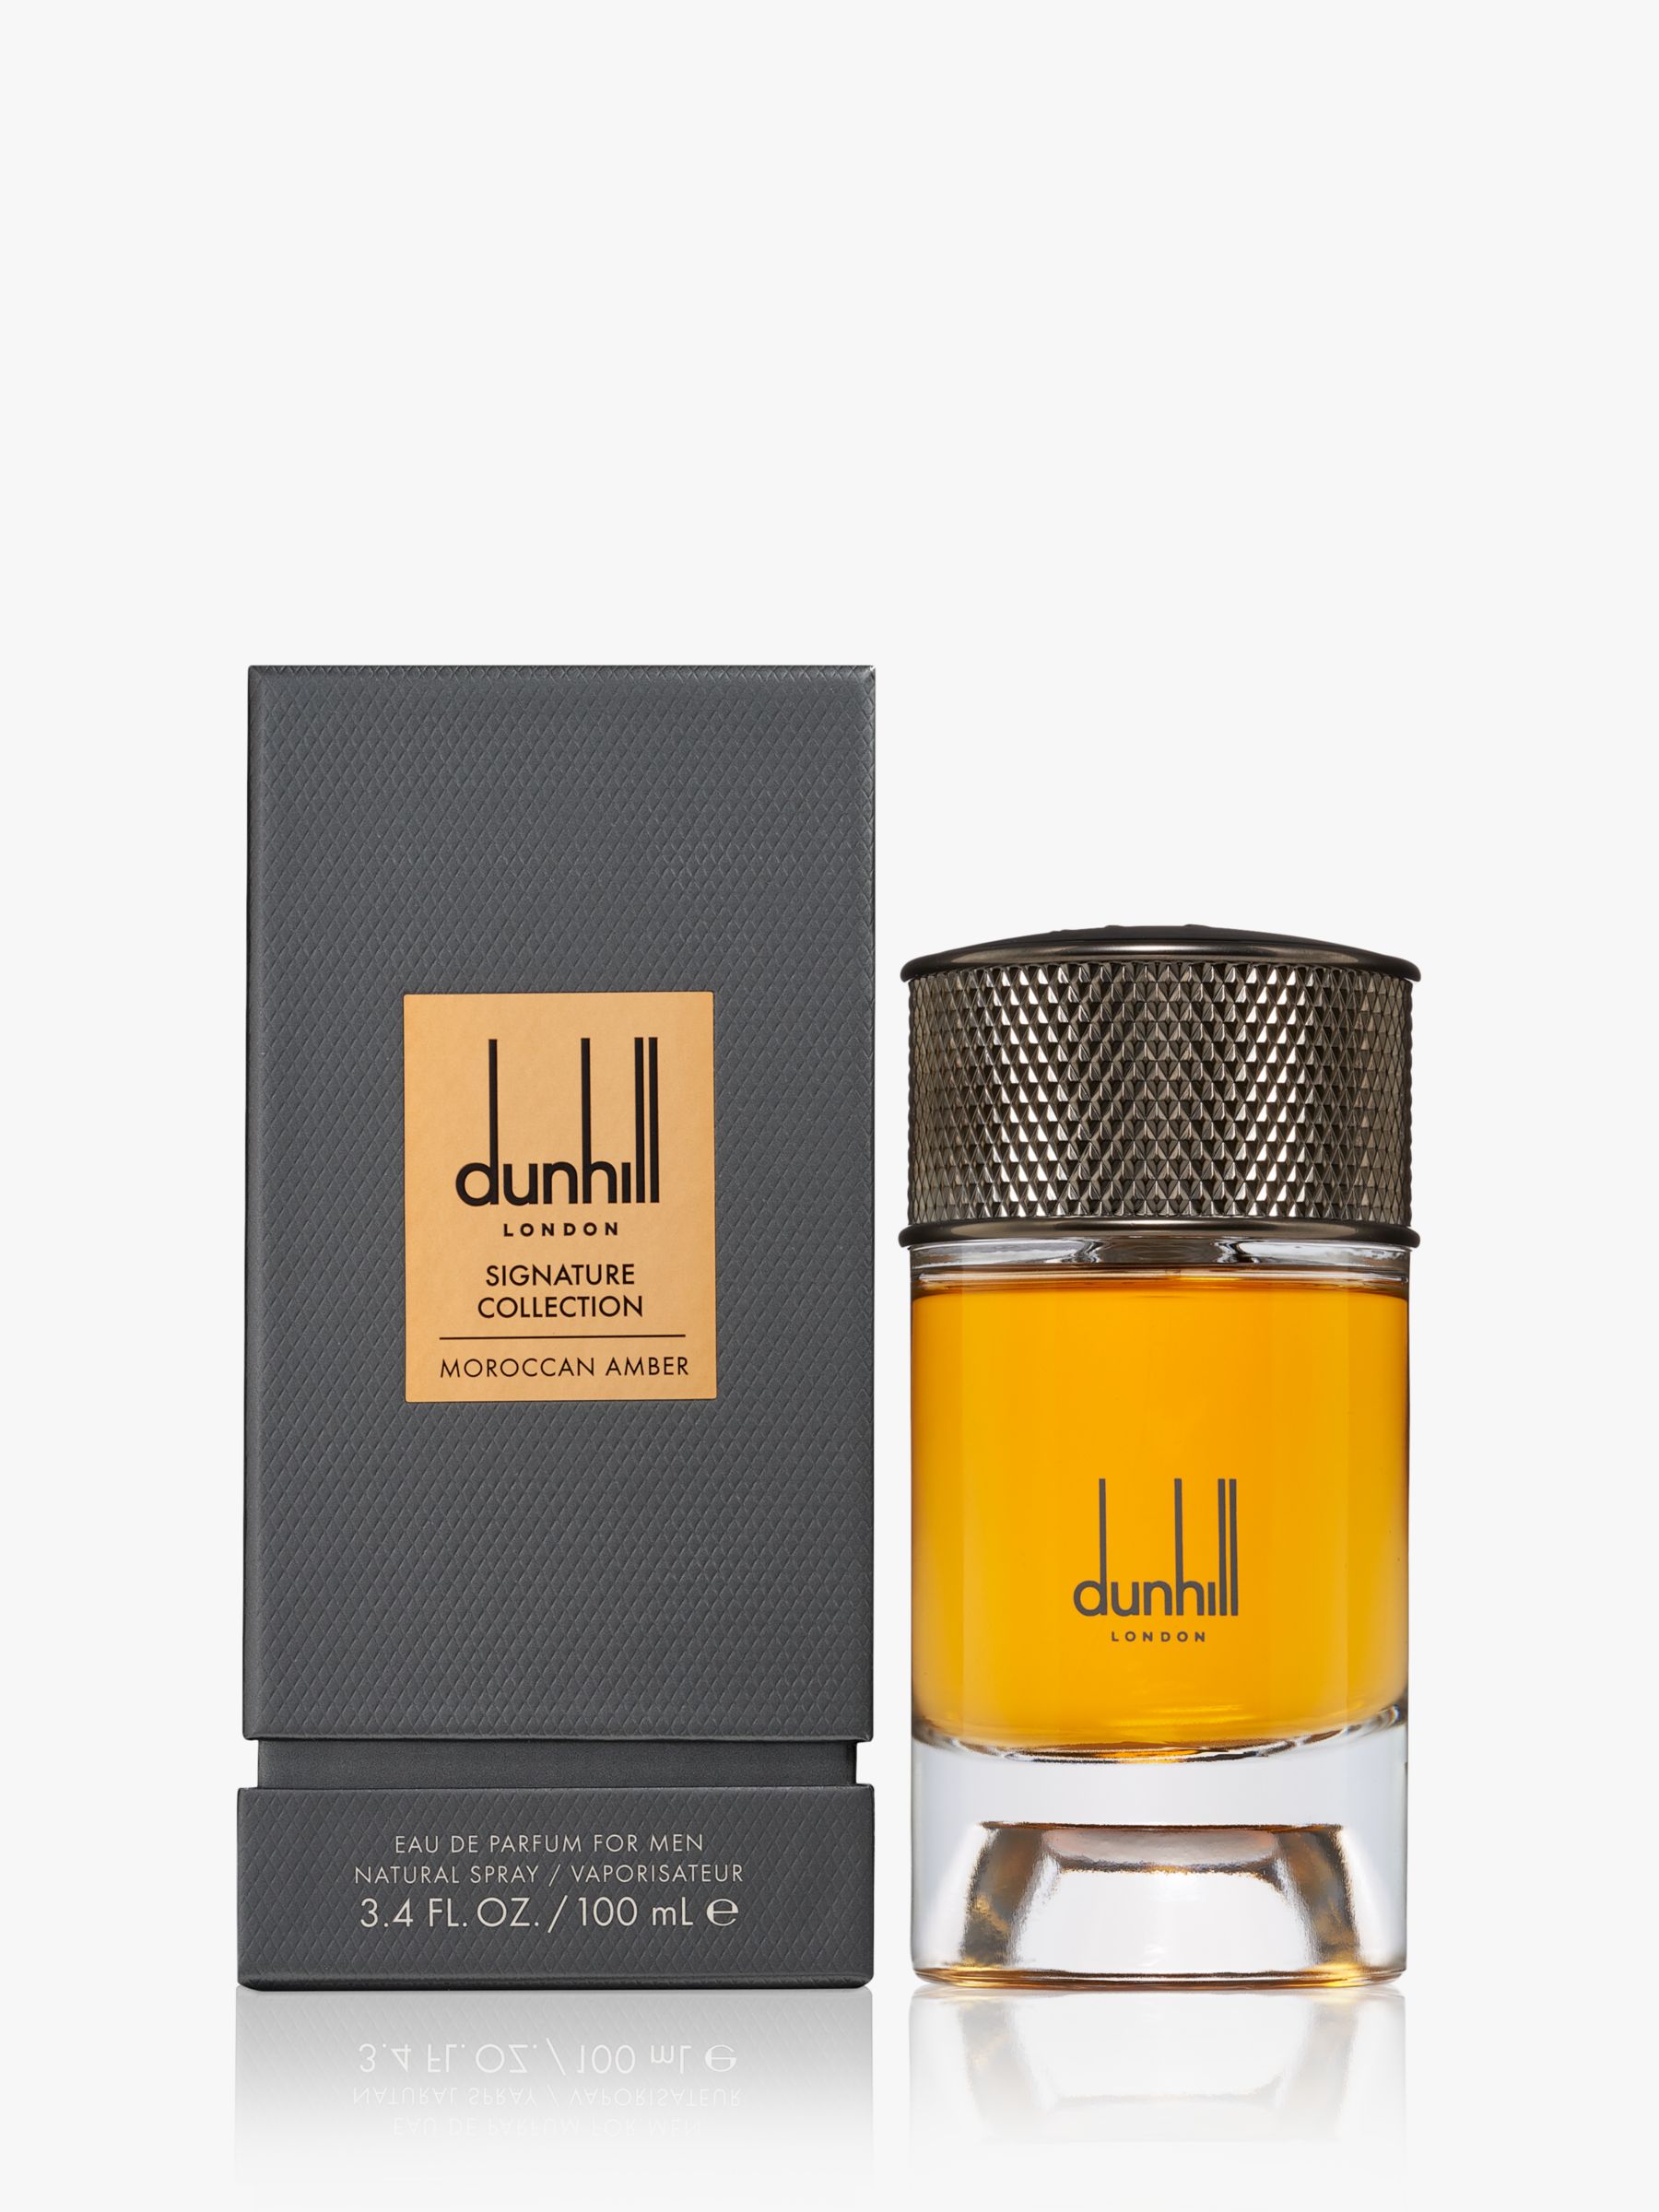 Dunhill Signature Collection Moroccan Amber Eau de Parfum, 100ml